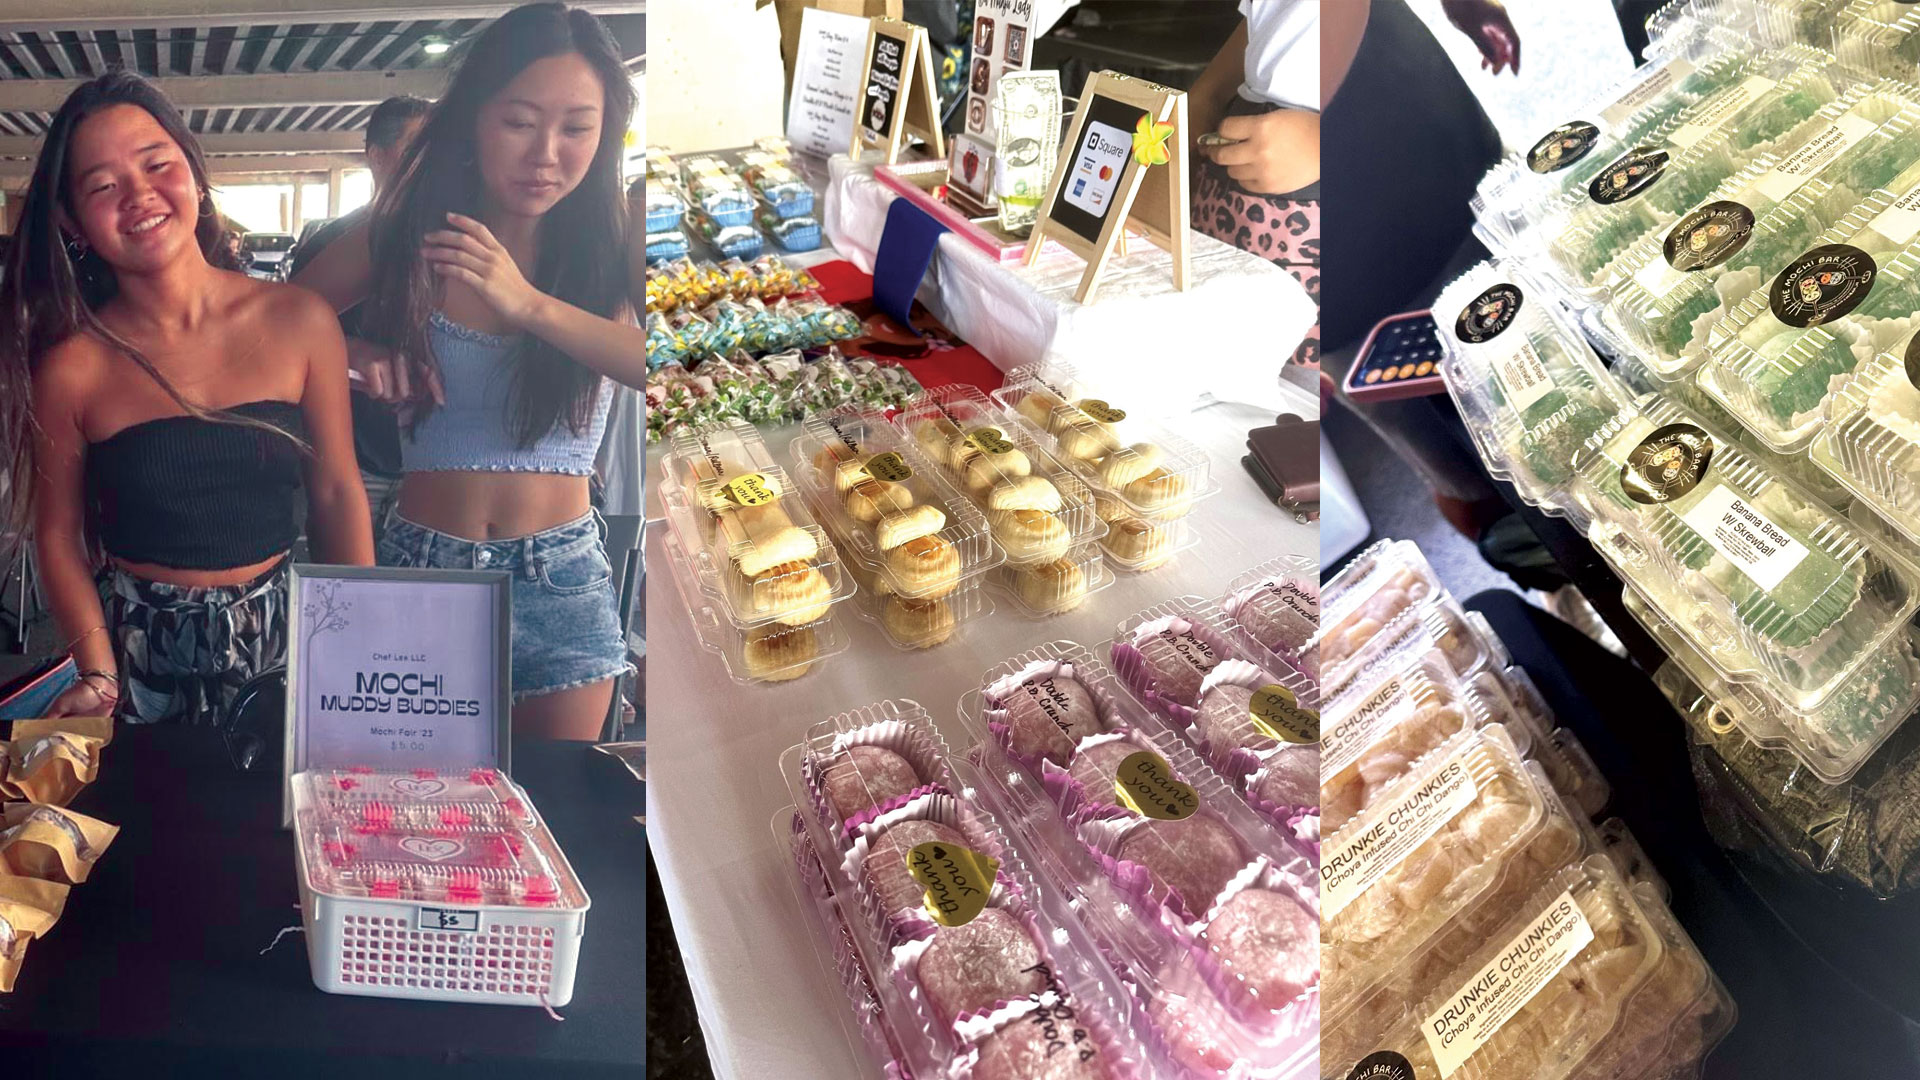 Vendors and mochi products at the Koko Marina Center Mochi Fair